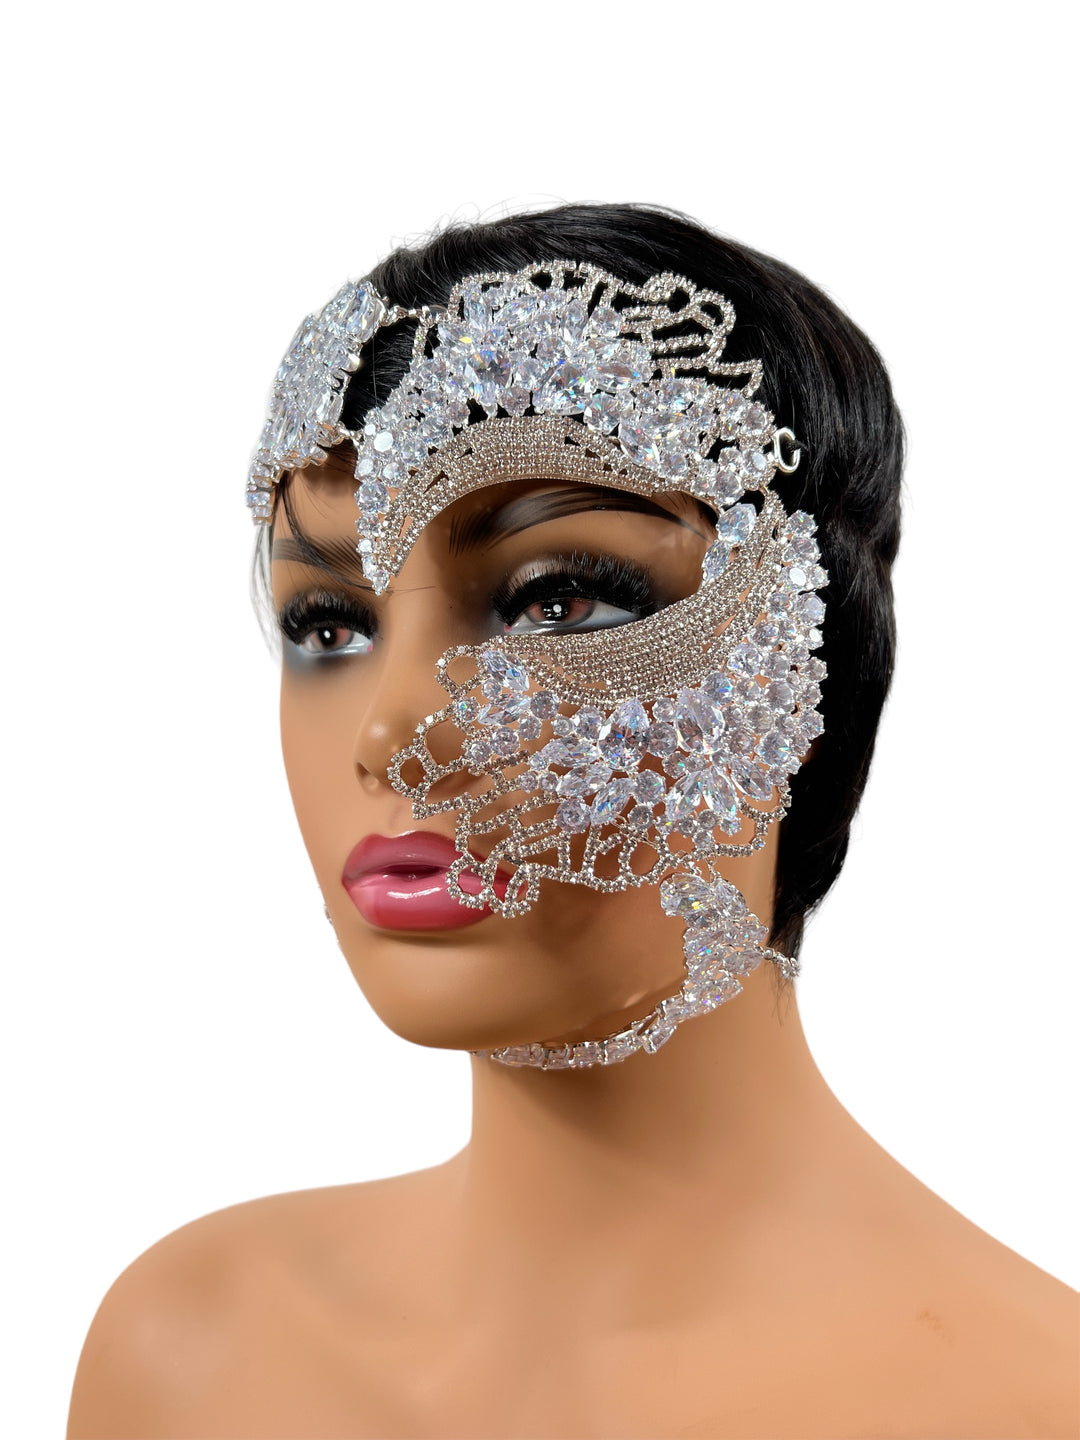 Rhinestone Mask Masquerade Masks Women Halloween Mask Venetian Mask Crystal Face Mask